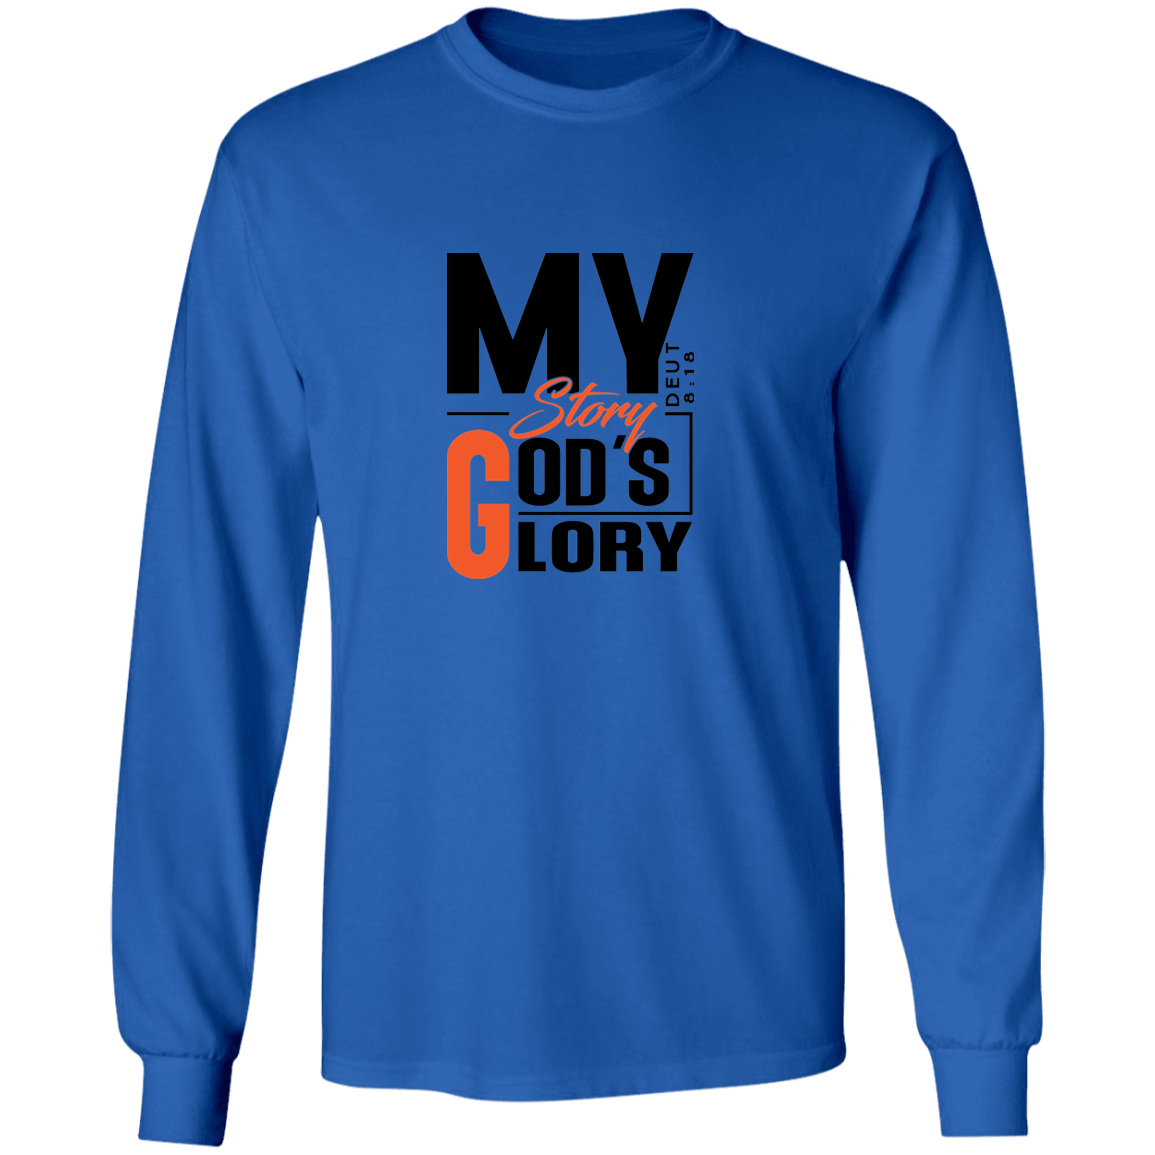 MY STORY GOD'S GLORY LongSleeve T-Shirt